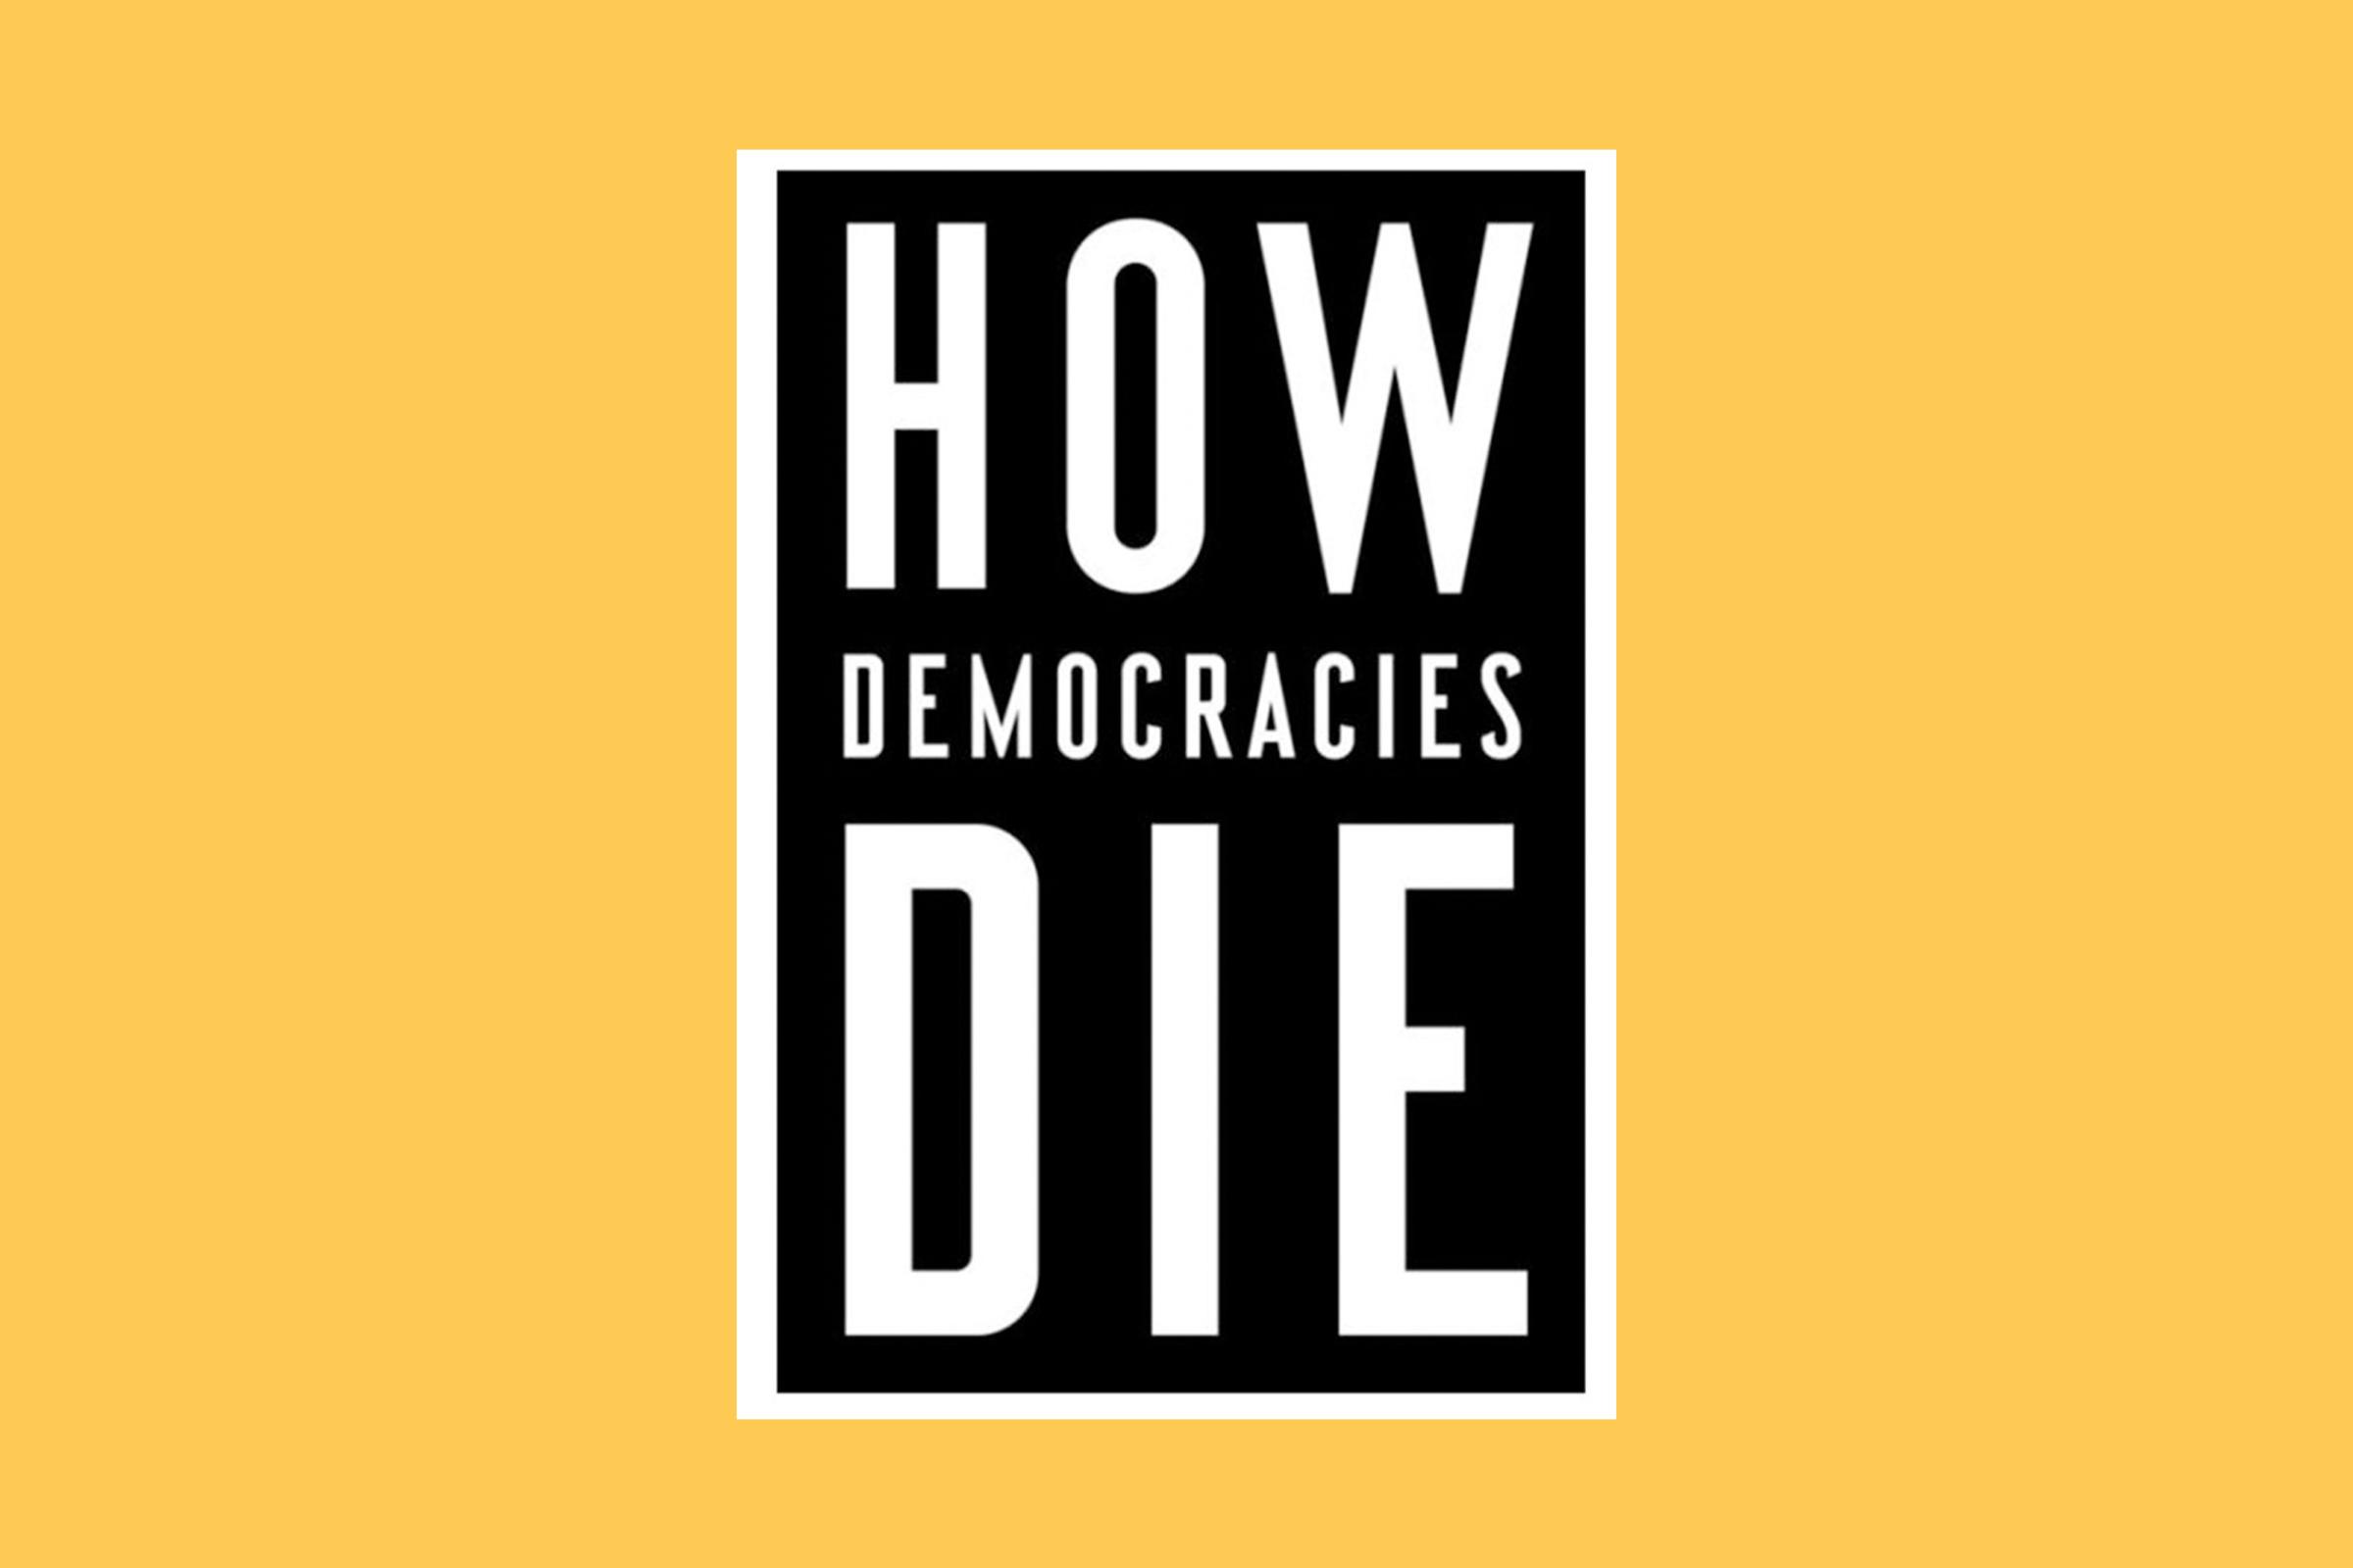 How Democracies Die, Steven Levitsky and Daniel Ziblatt, Crown